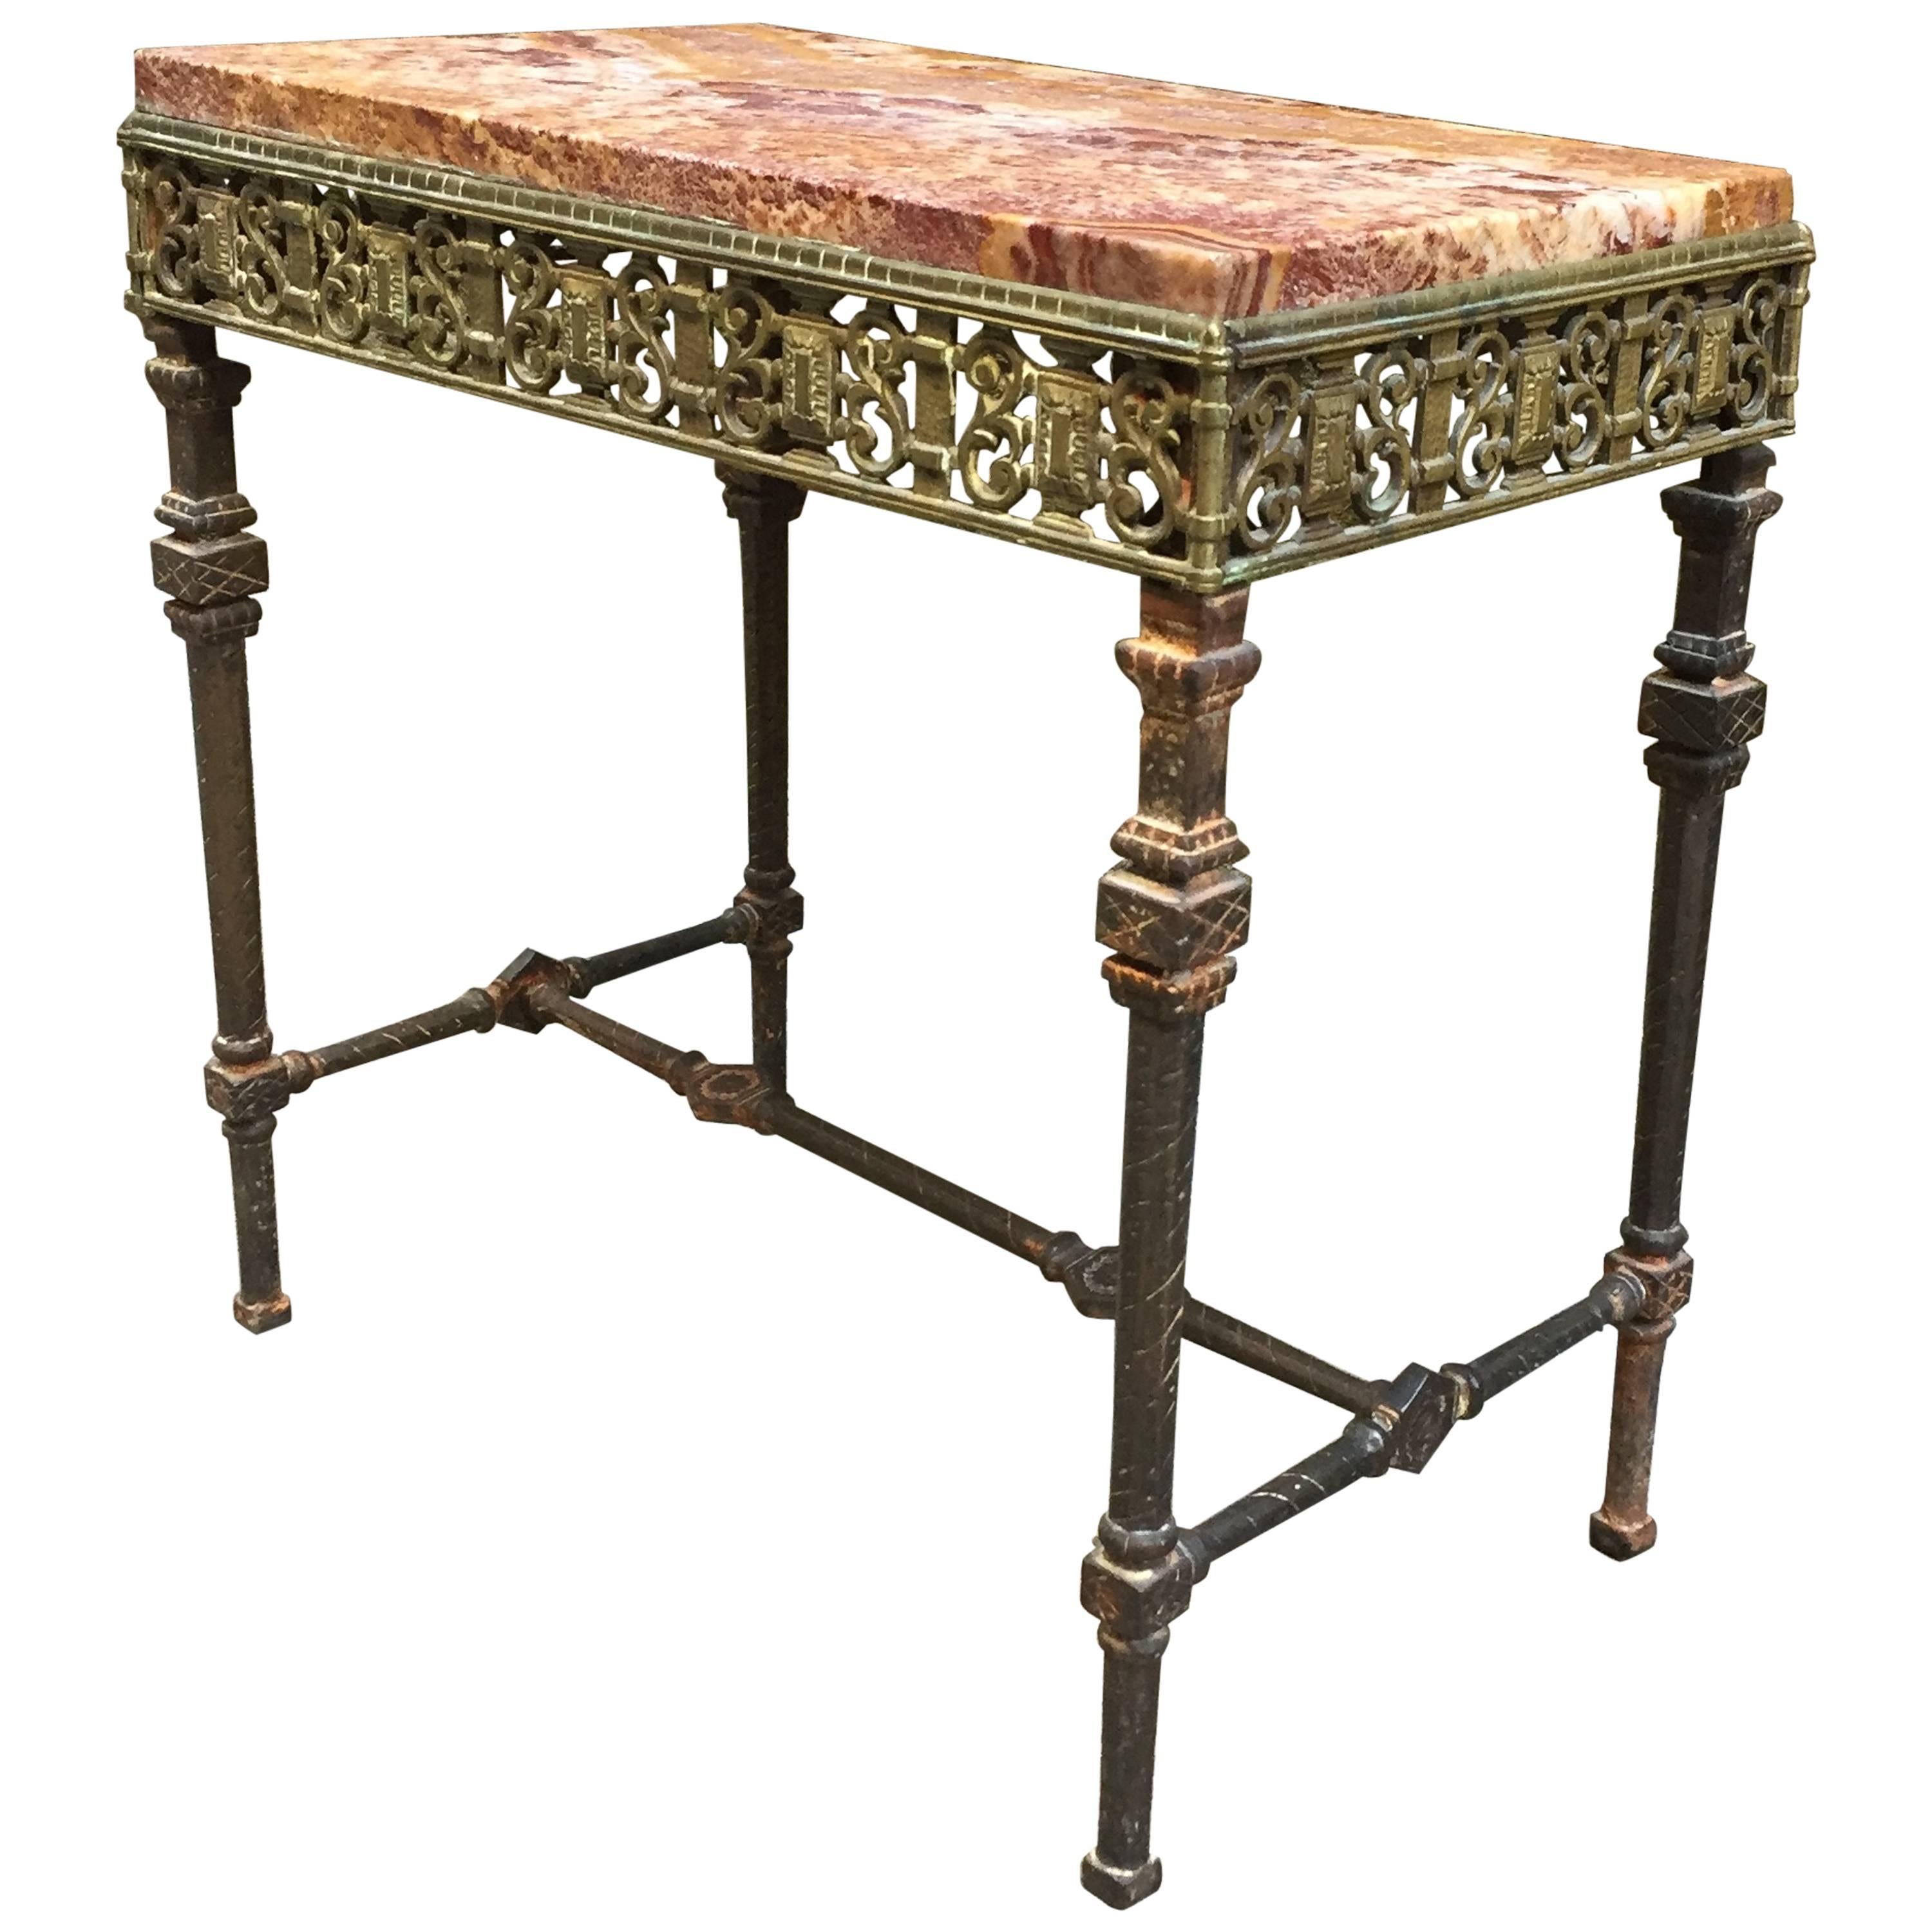 Oscar Bach Style Iron and Marble-Top Table